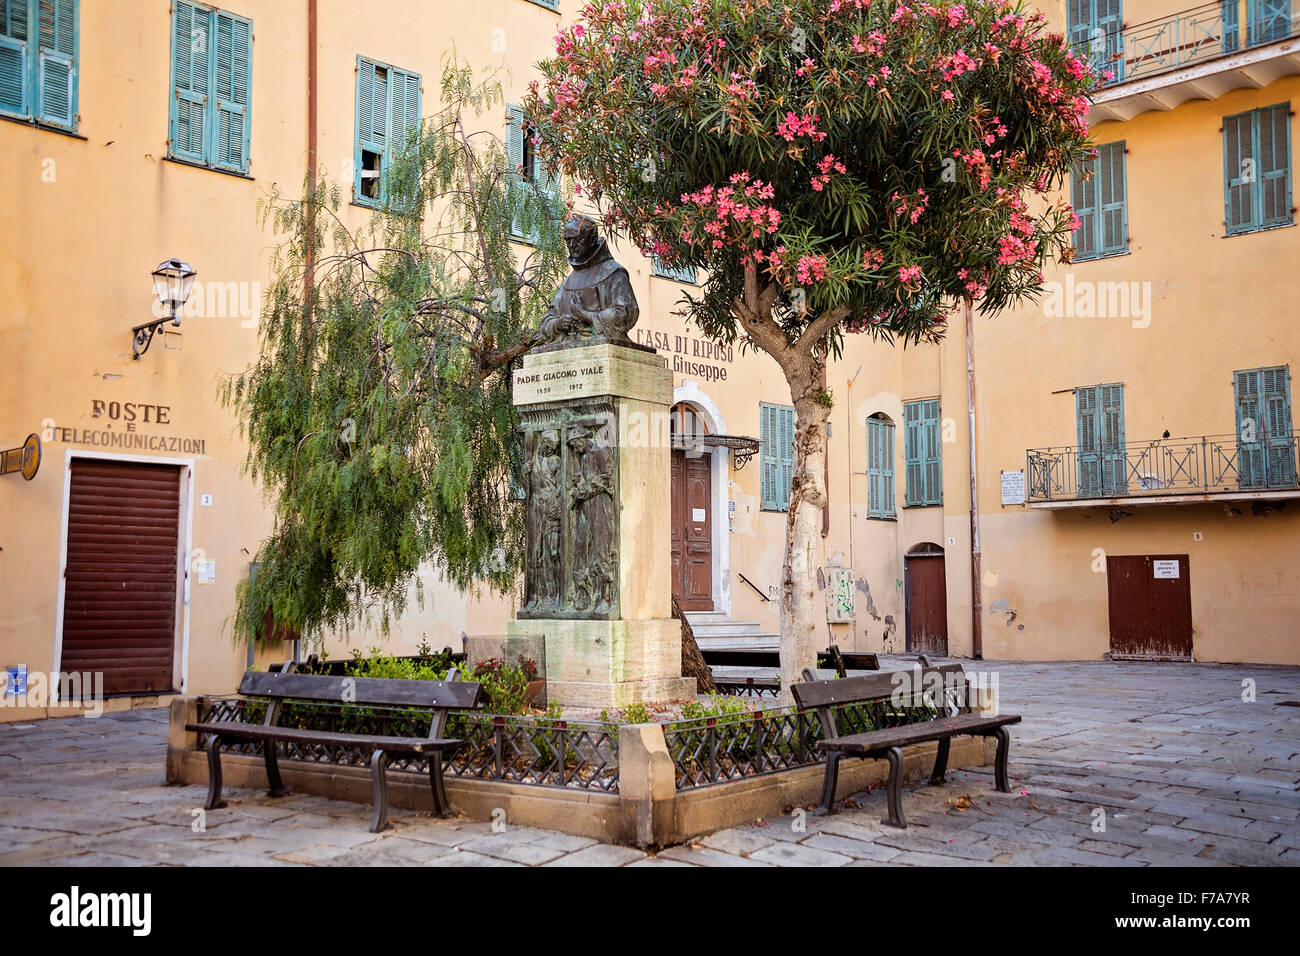 Piazza Padre Giacomo Viale, Bordighera, Imperia, Ligurien, Italien. Stockfoto